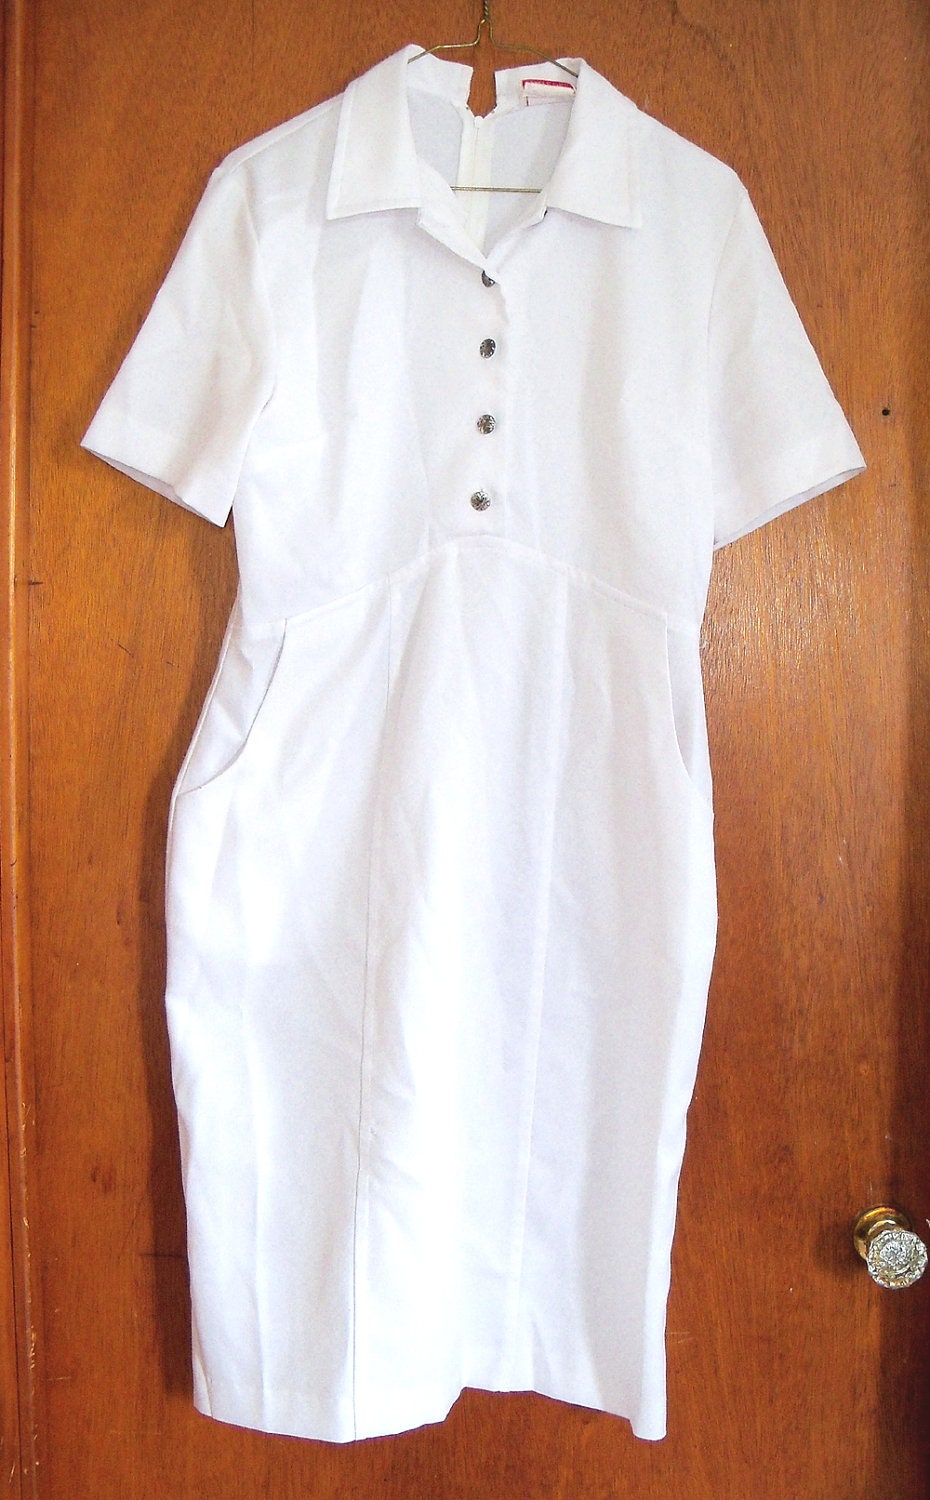 SALE Vintage White Cross Nursing Dress Uniform by retroheart